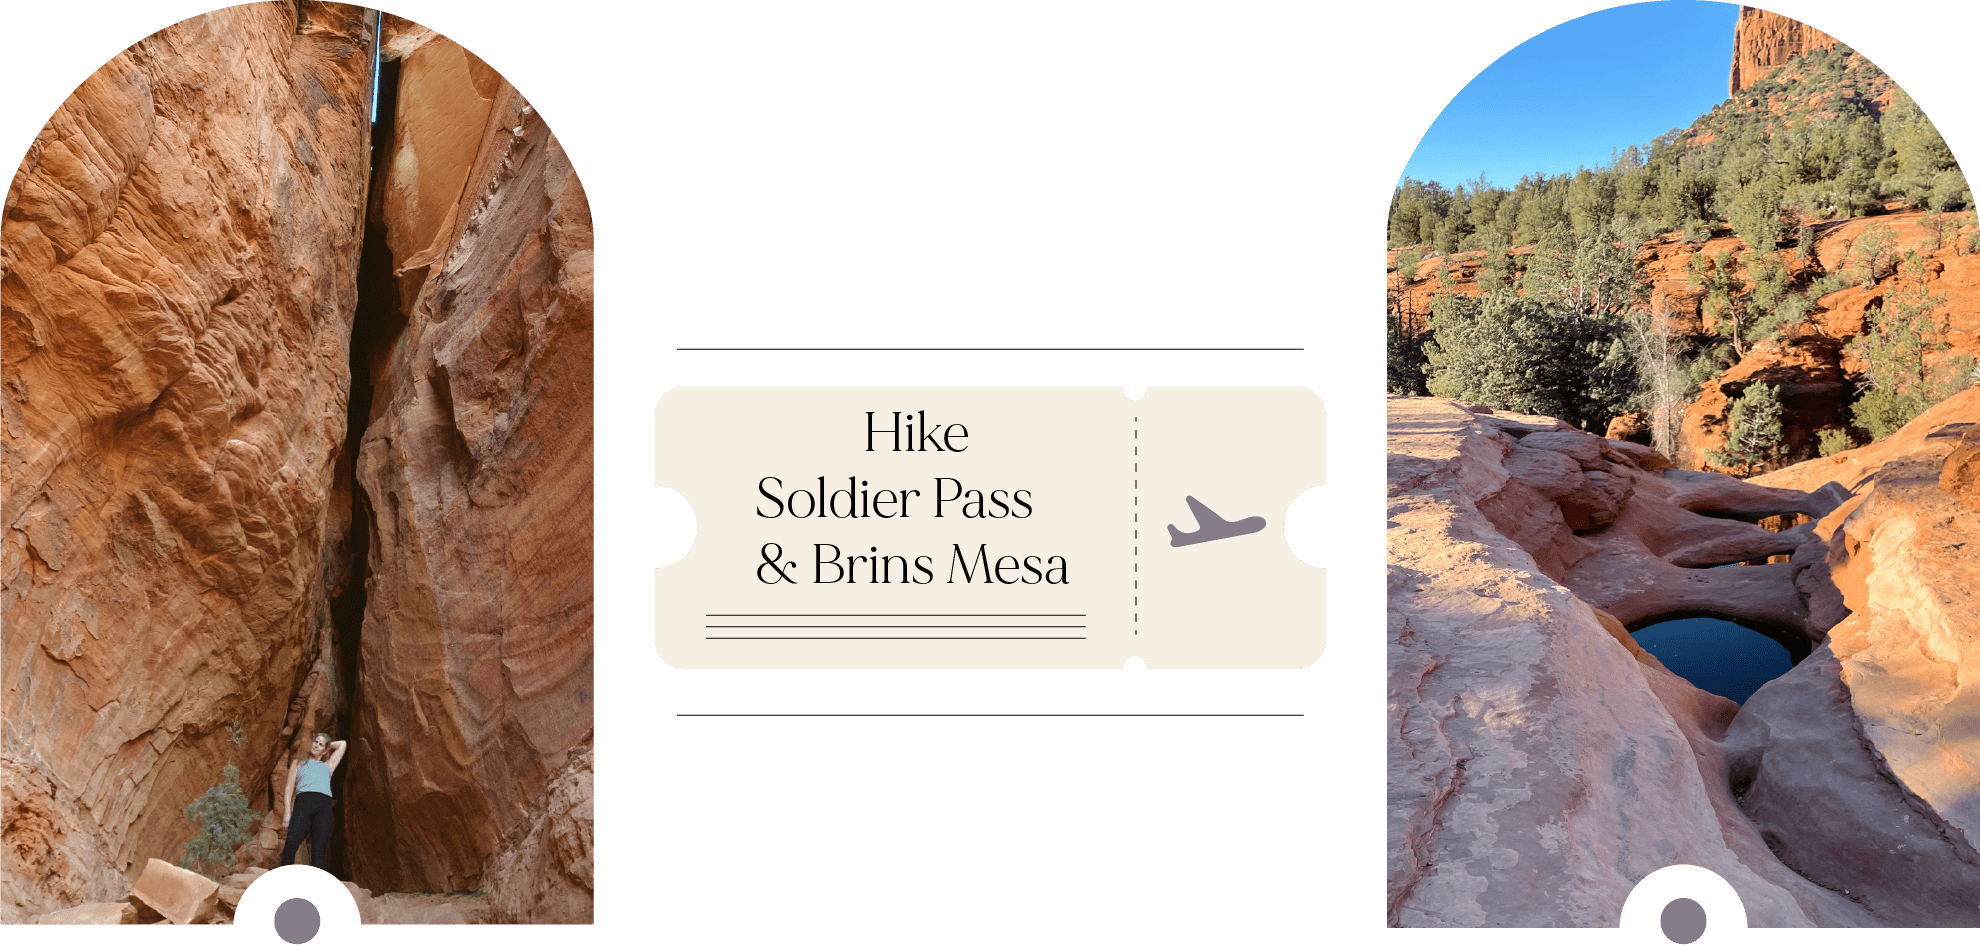 Hike Soldier Pass & Brins Mesa